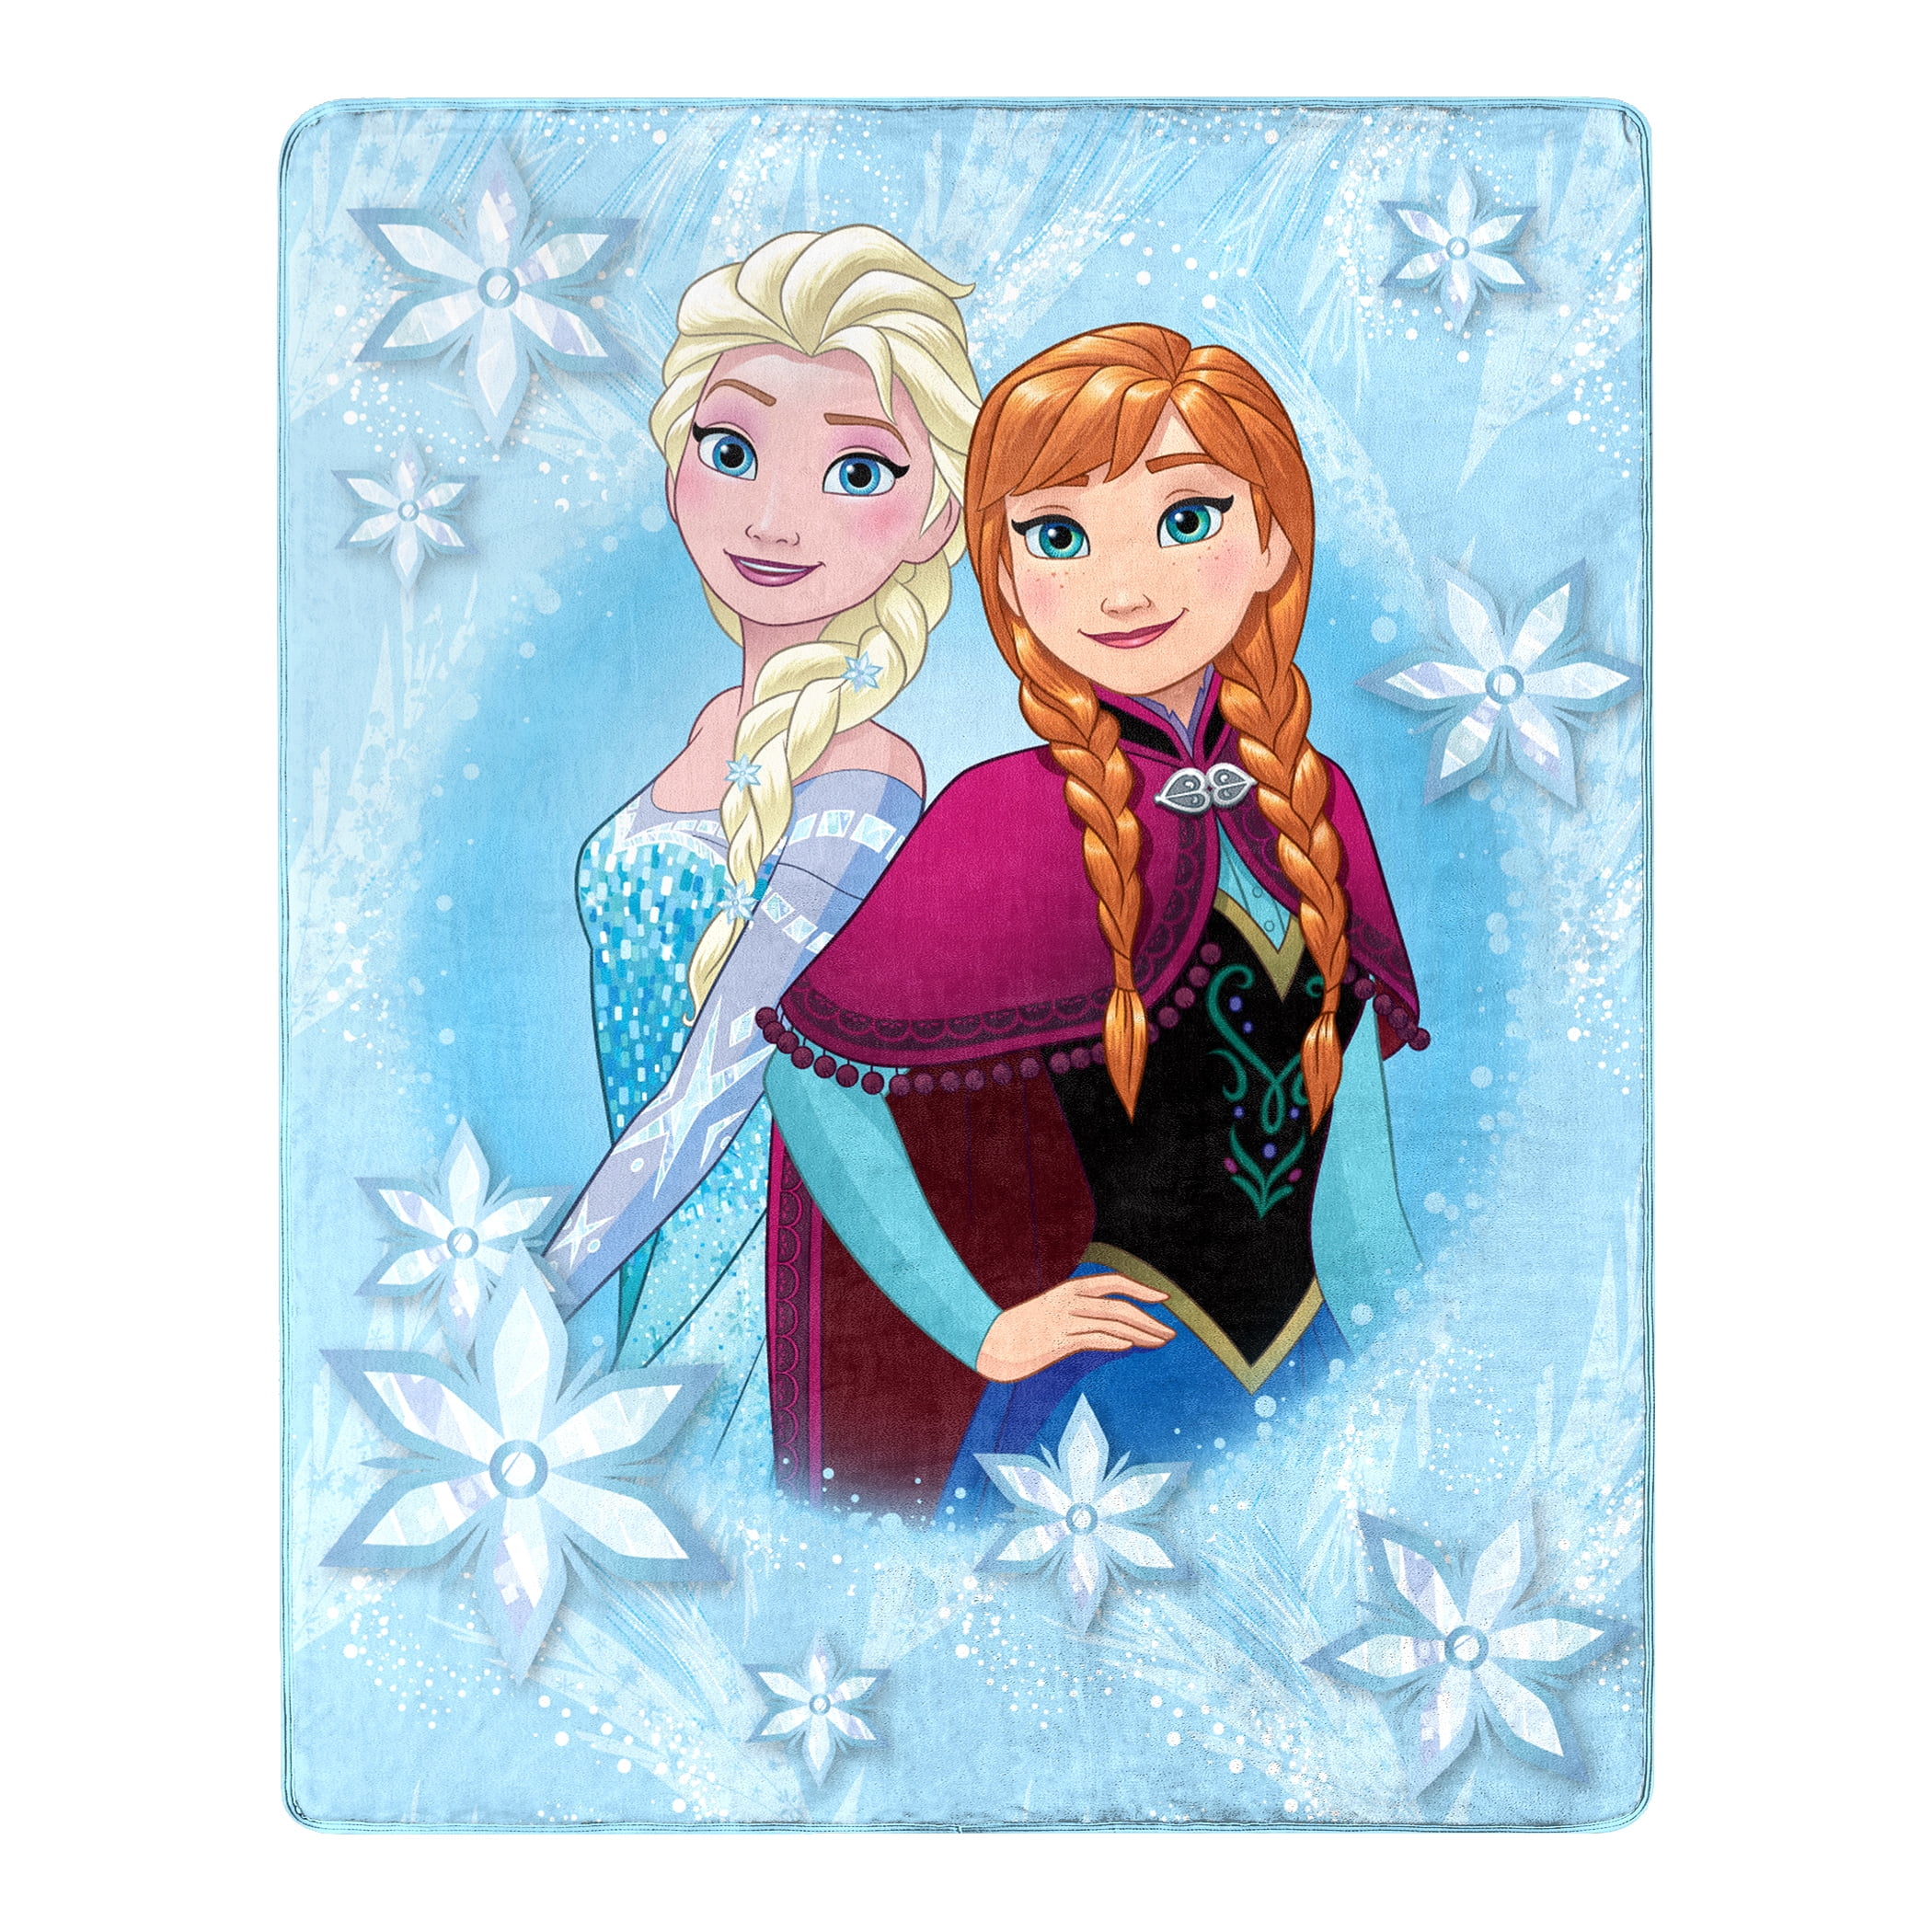 Magical Girls Silk Touch Throw Blanket Disney Frozen 2 40 x 50